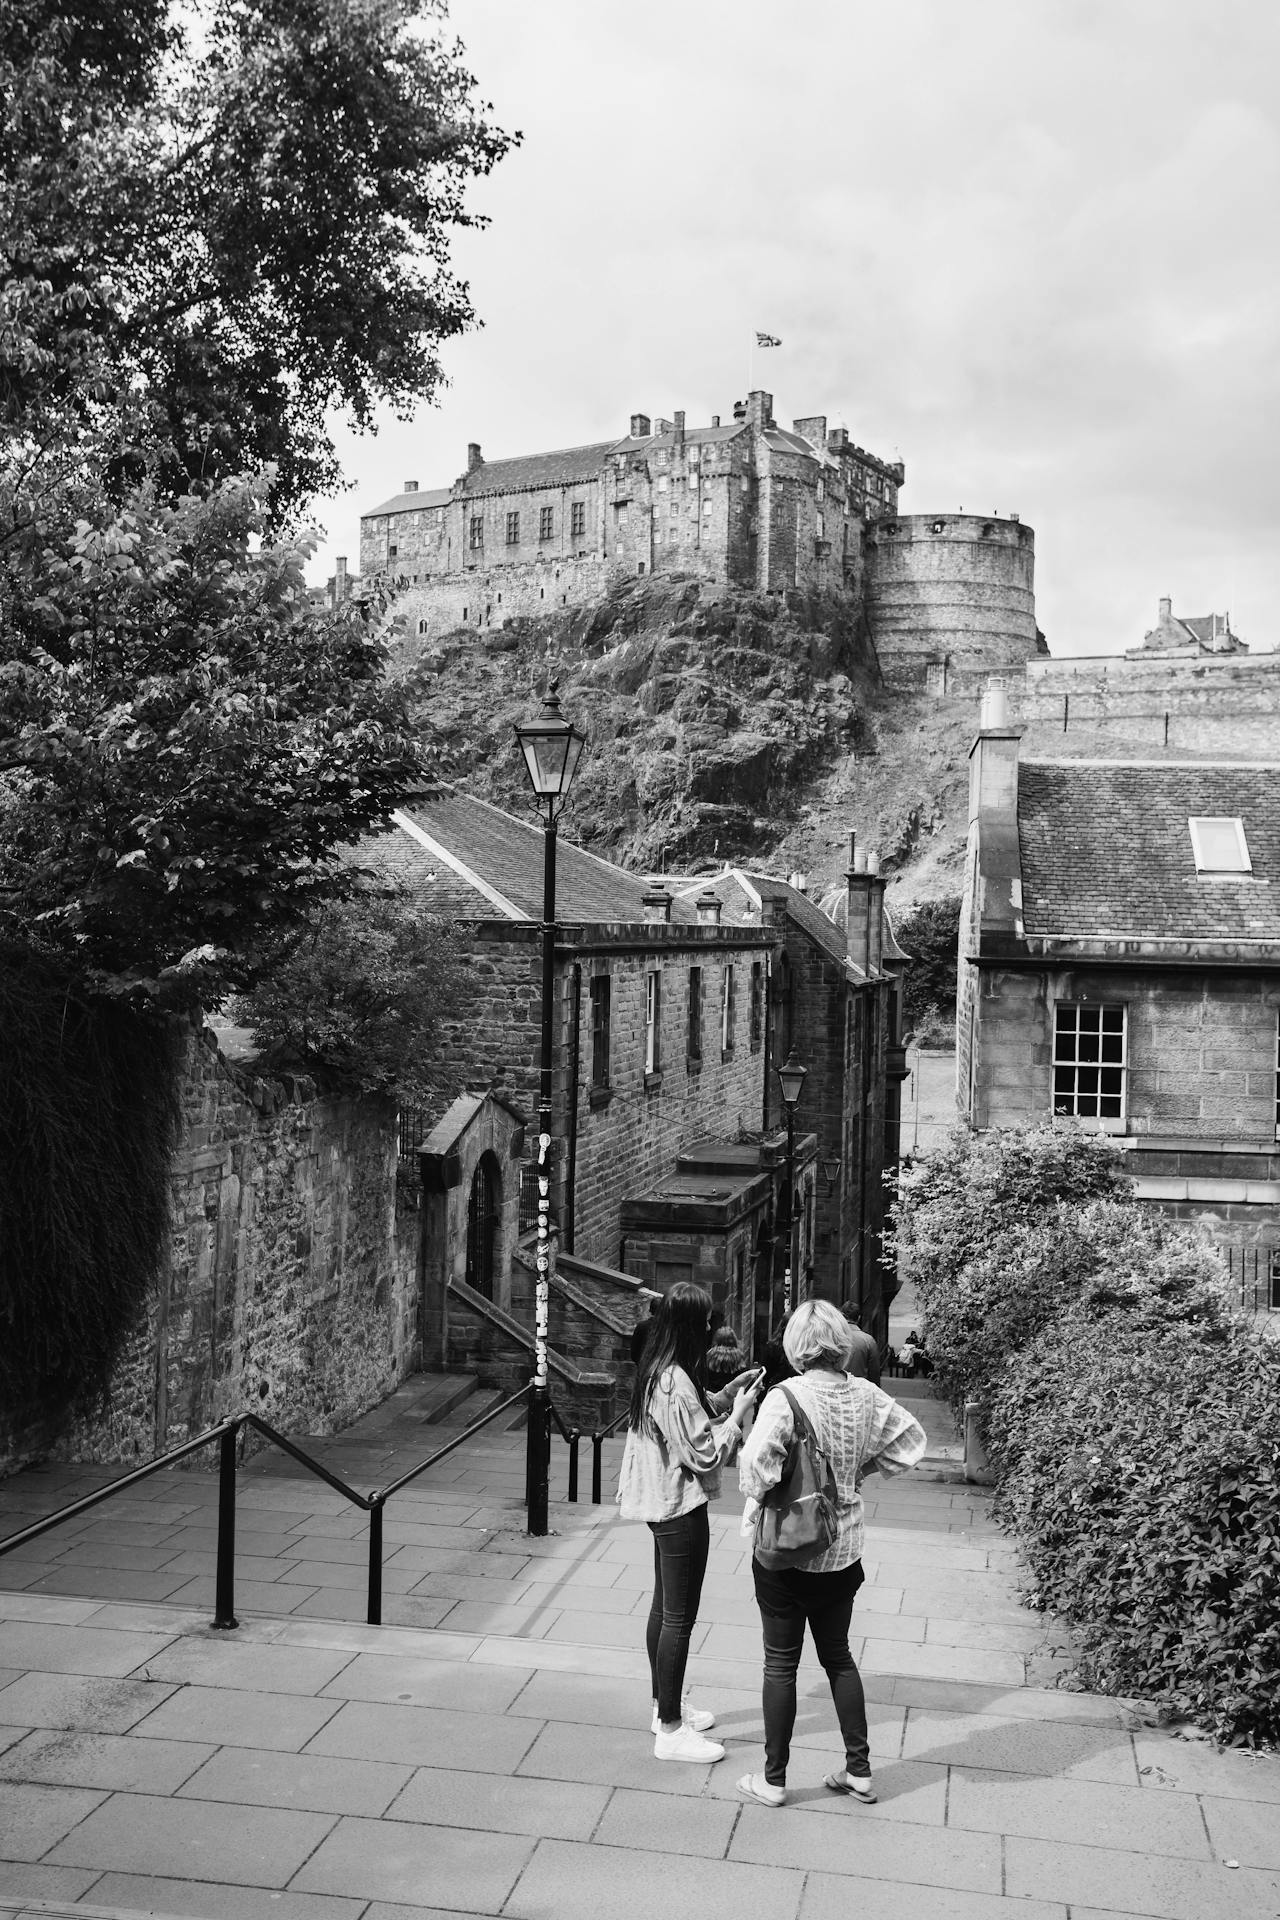 Two women at the bottom of Edinburgh Castle